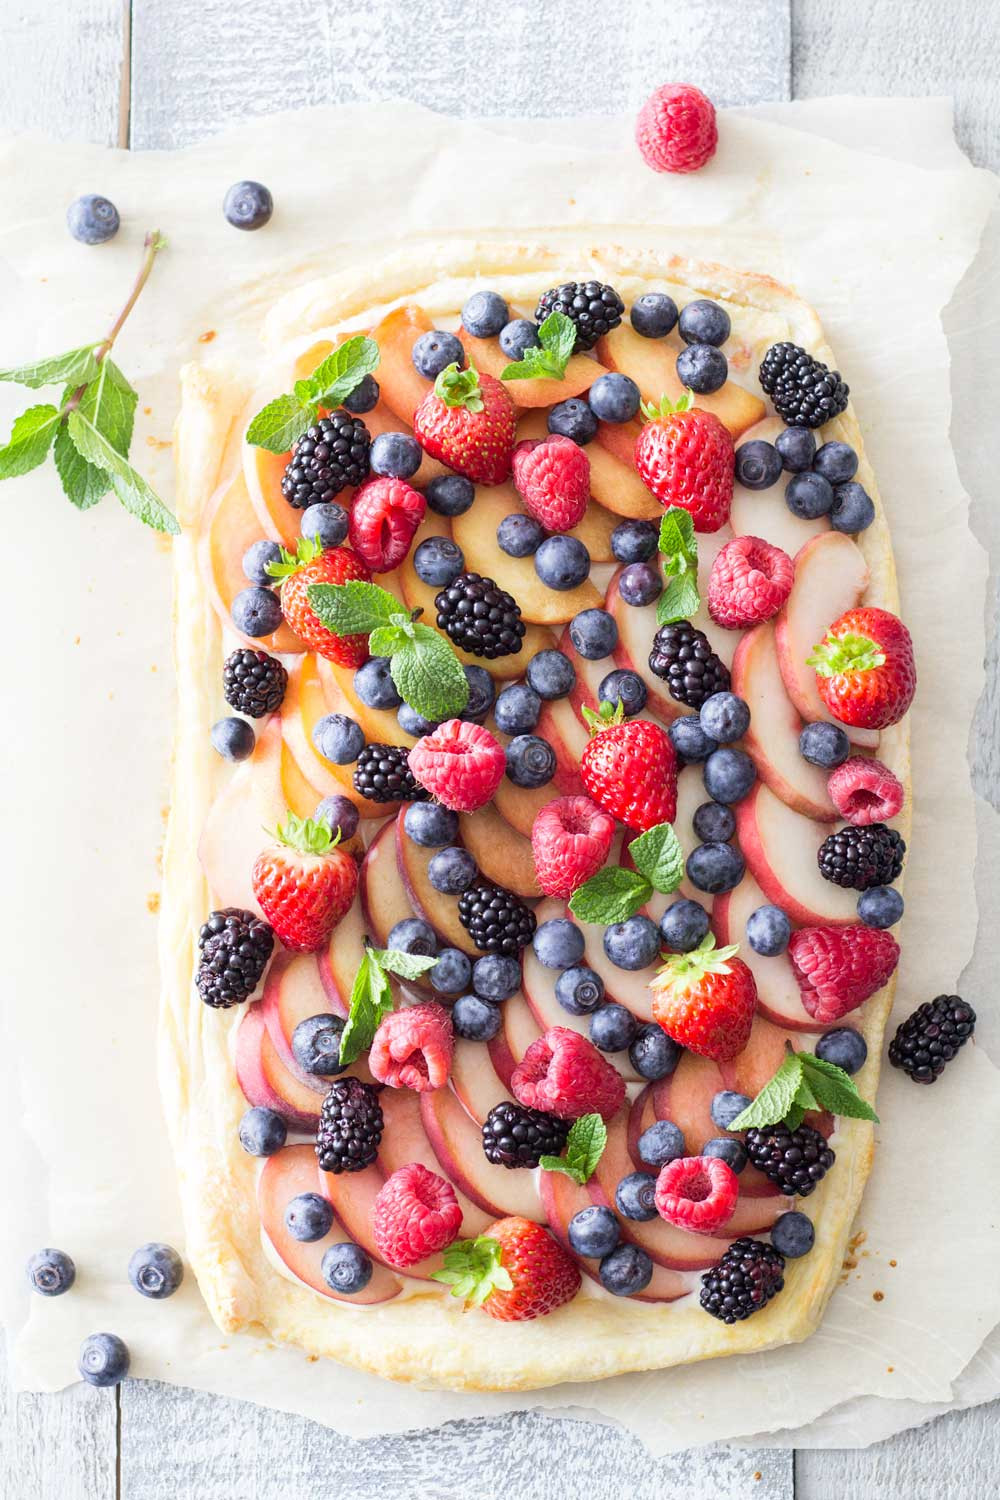 Summer Fruits Desserts
 15 Healthy Desserts for Summer Eating Made Easy